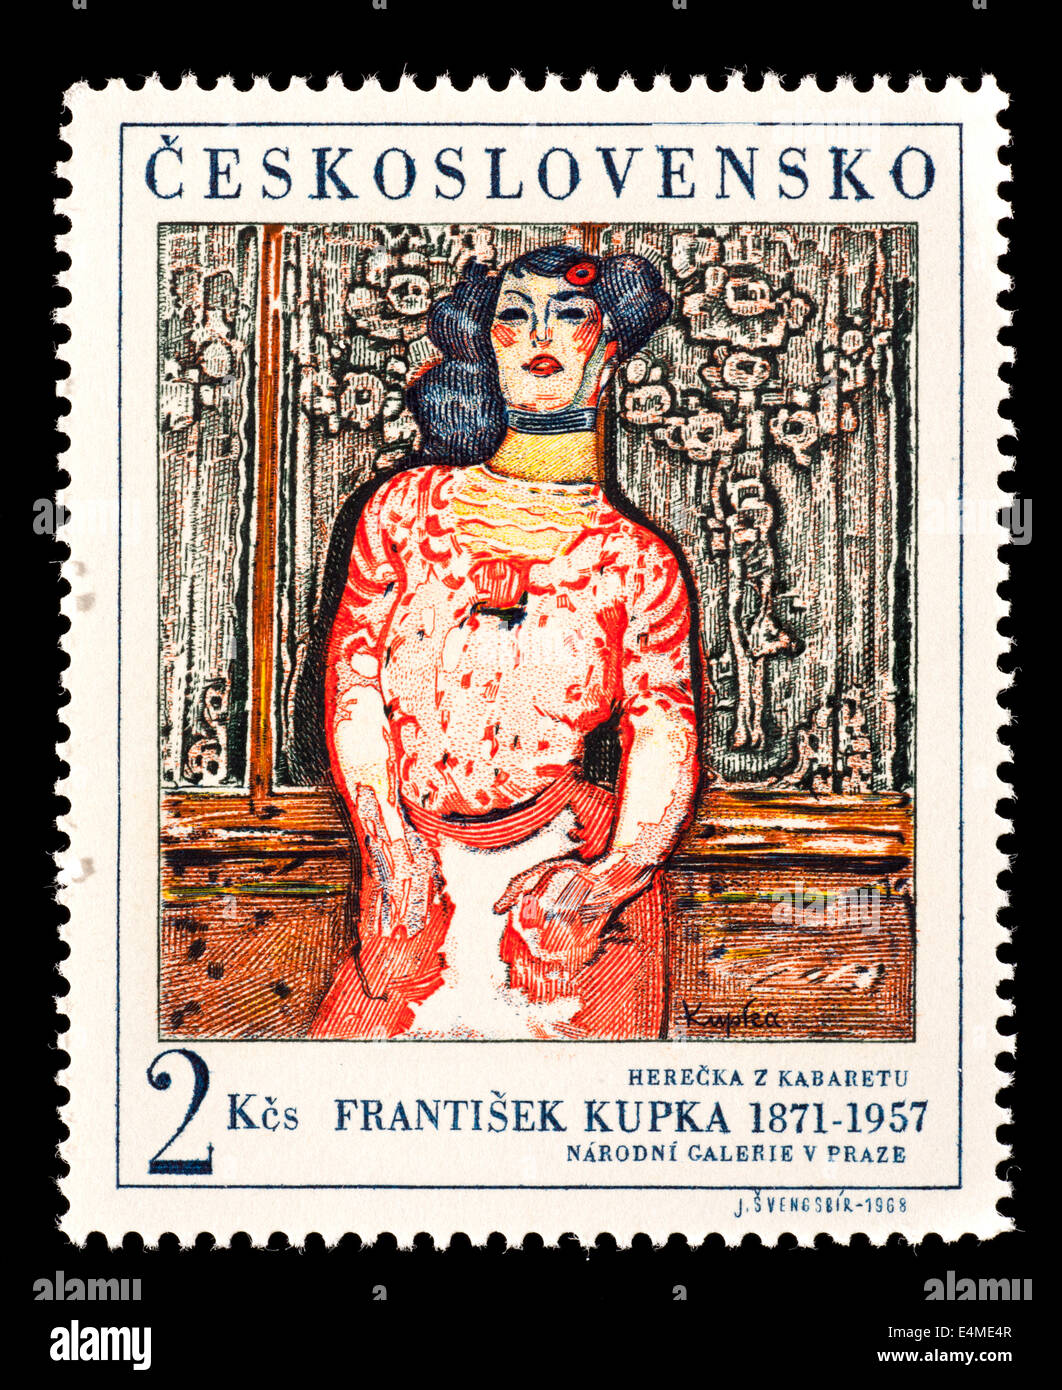 Postage stamp from Czechoslovakia depicting the Frantisek Kupka painting 'Cabaret Performer' Stock Photo